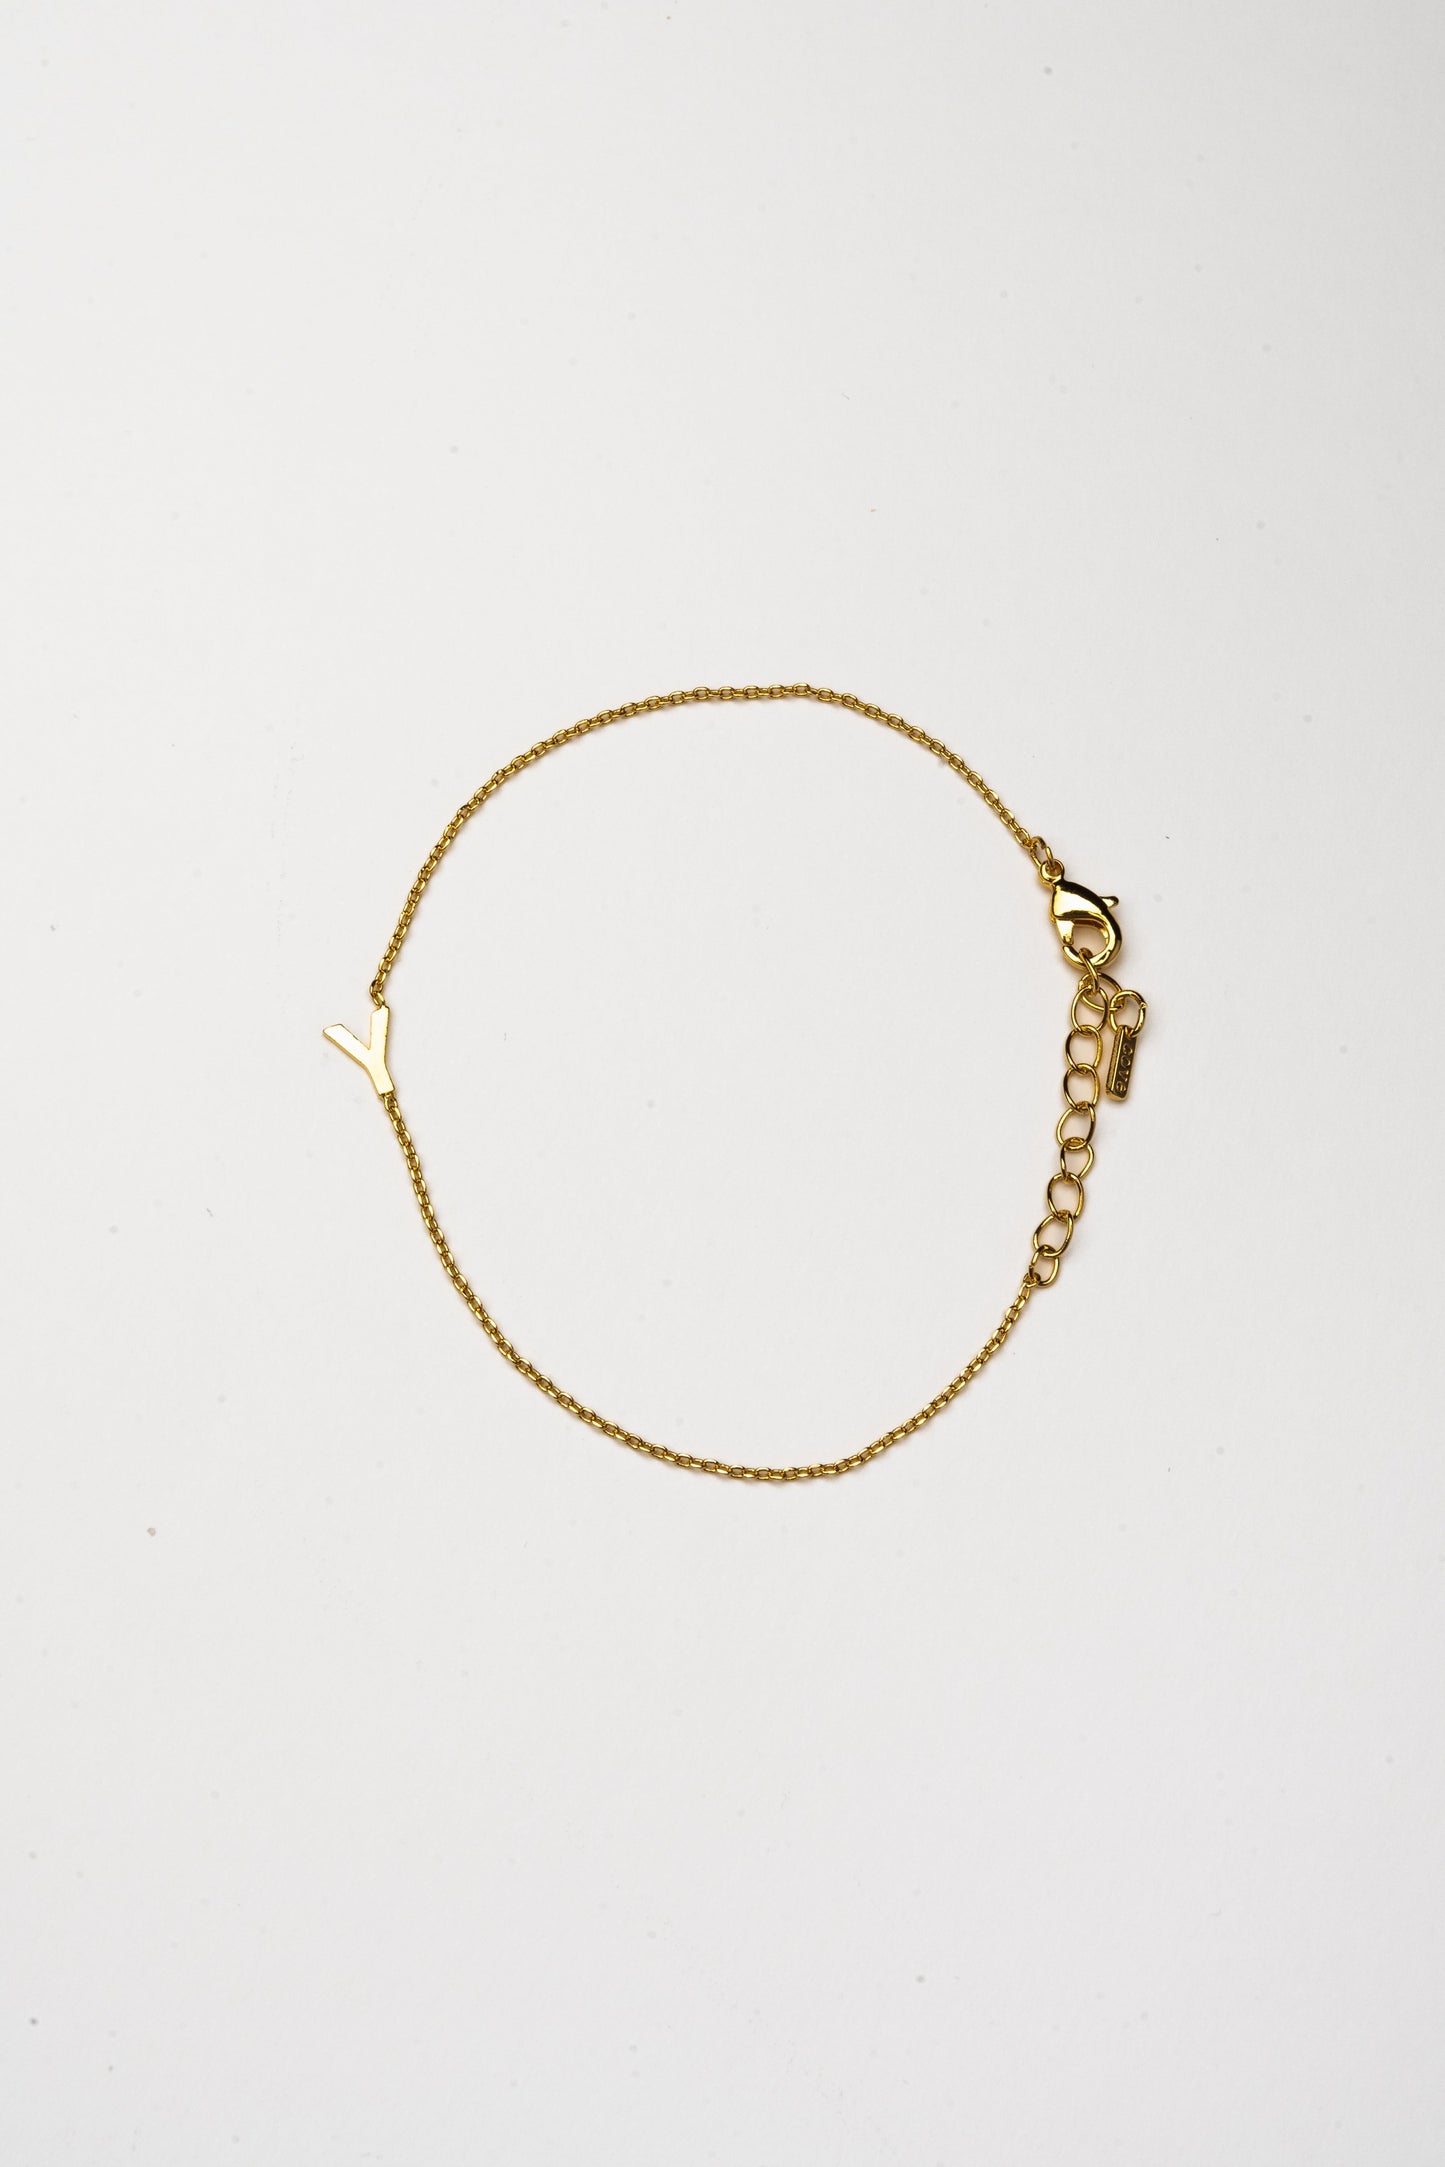 Cove Initial Bracelet WOMEN'S BRACELET Cove Accessories 18k Gold Plated 7" + 1" extender Y